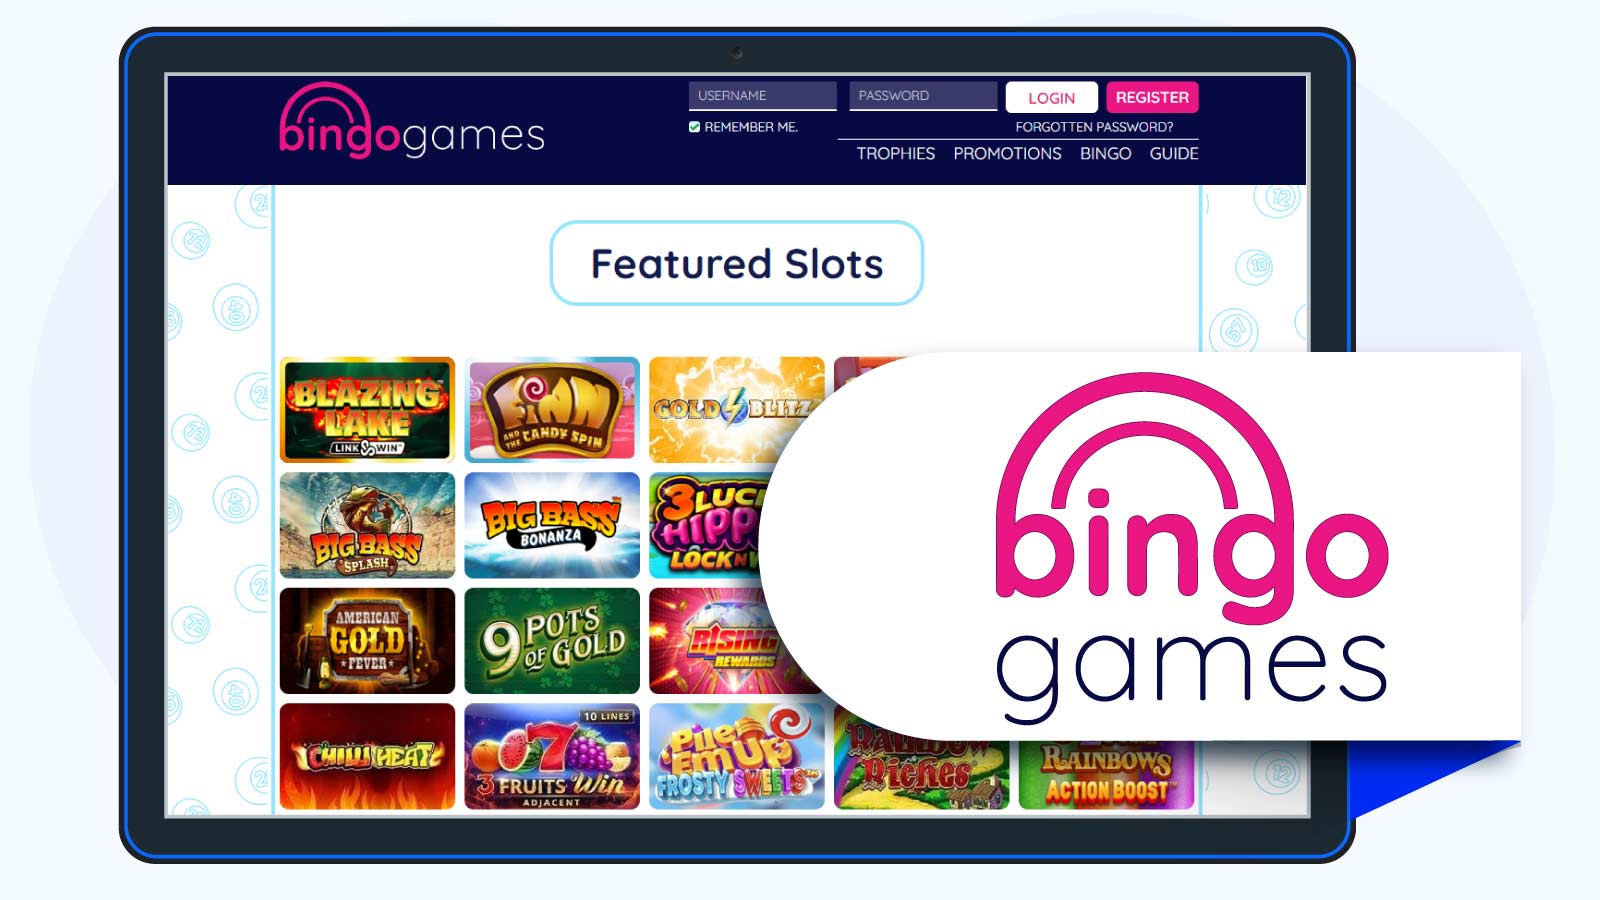 Bingo Games- 10 No Deposit Free Spins on Fluffy Favorites